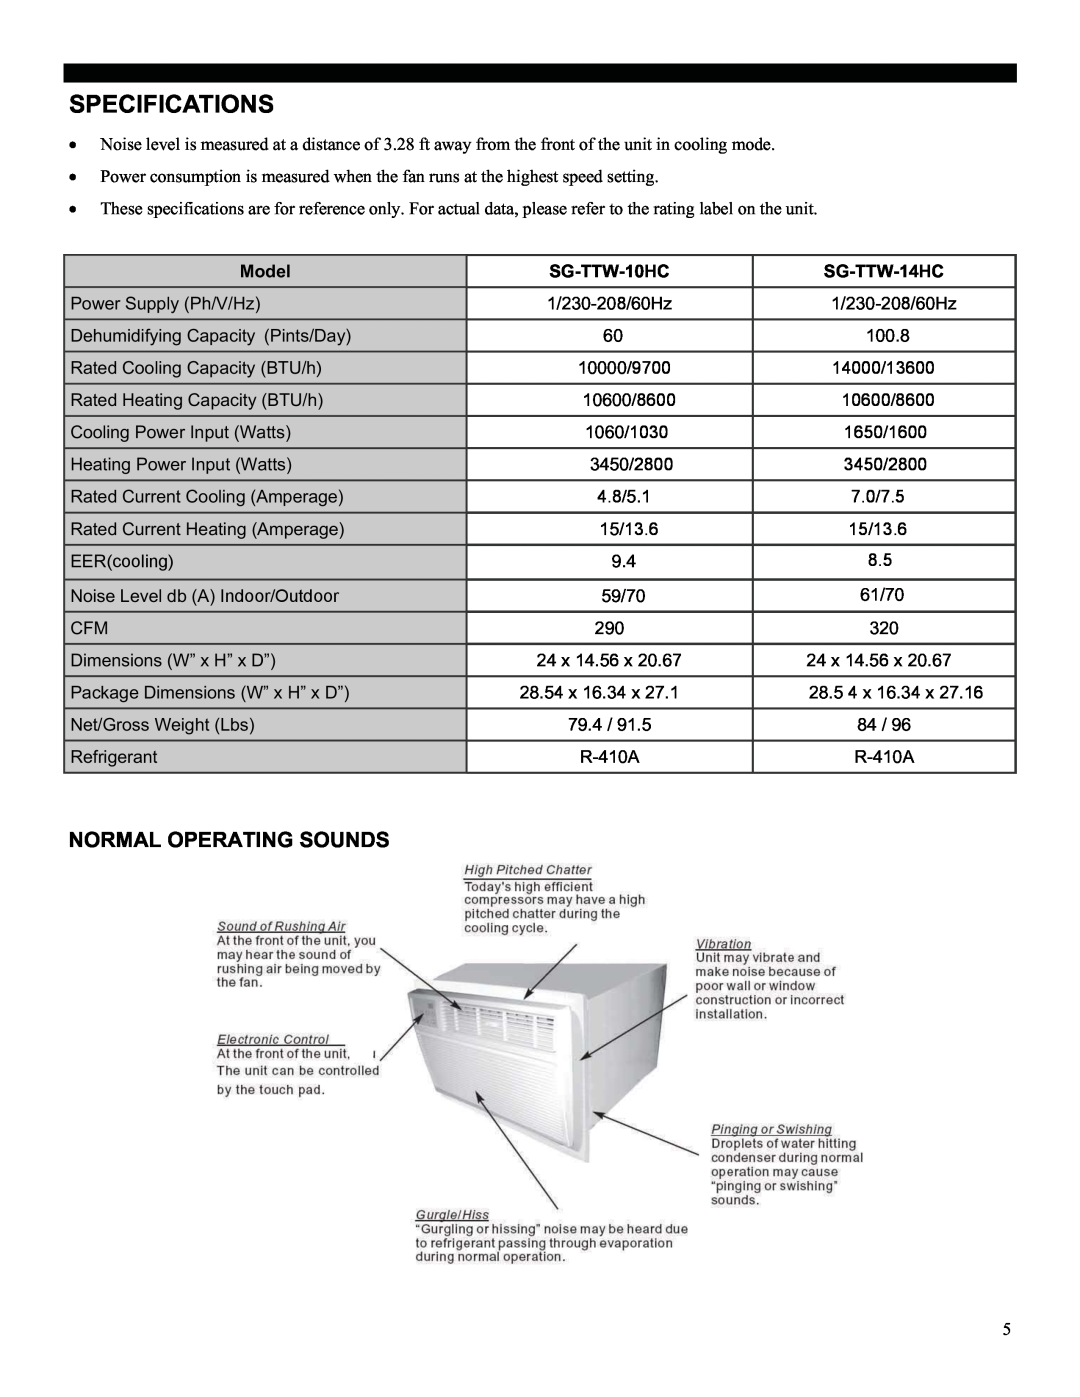 Soleus Air SG-TTW-14HC manual Specifications, Normal Operating Sounds, Model, SG-TTW-10HC 